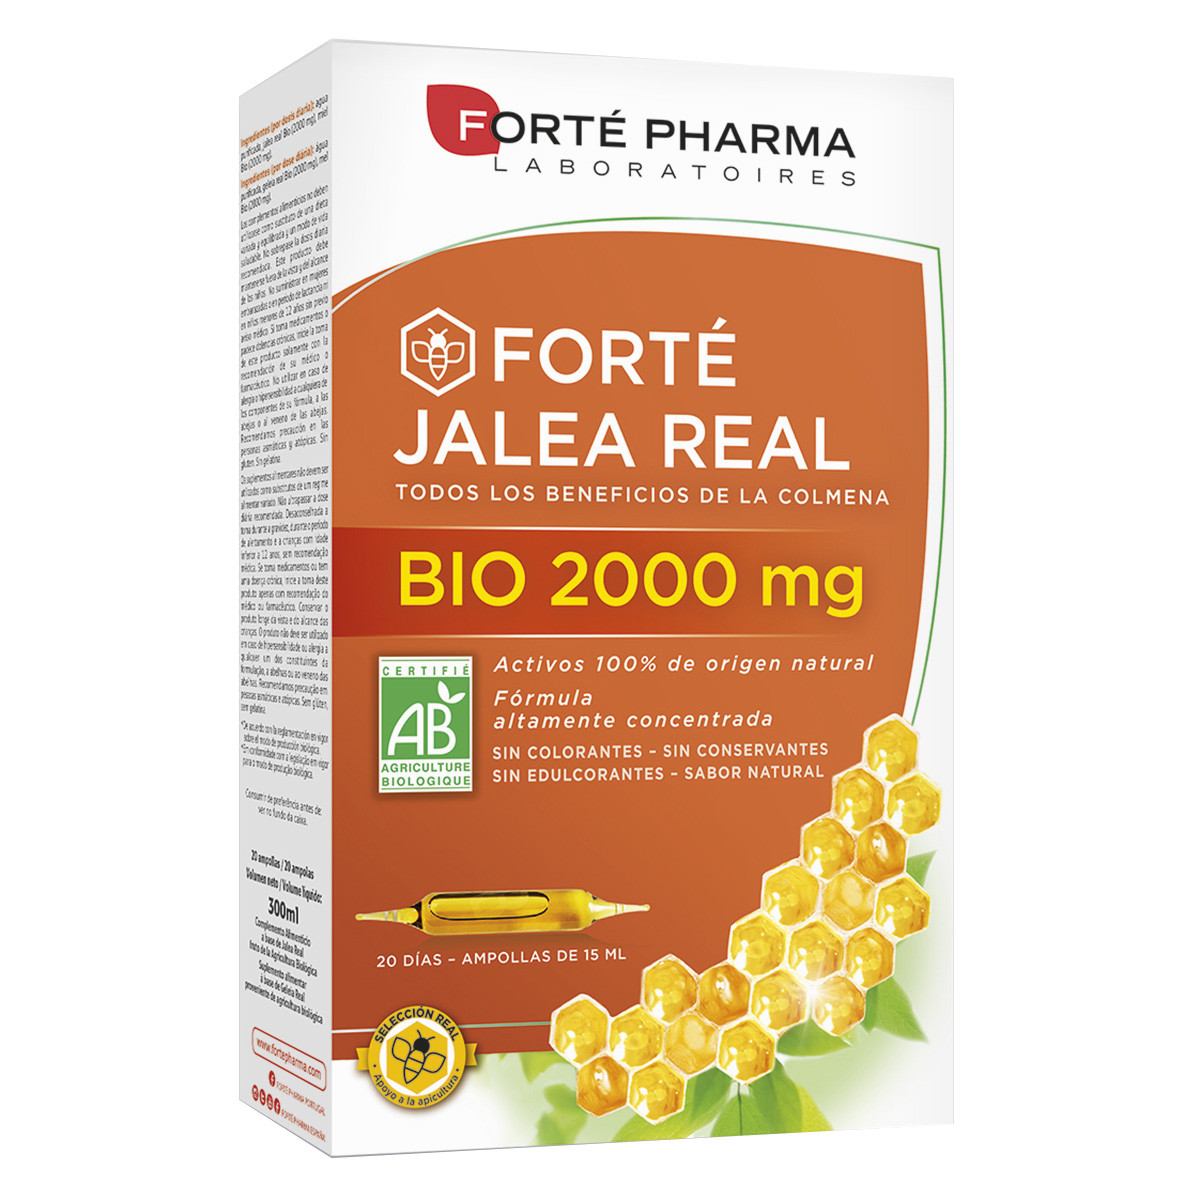 Imagen de Forte pharma jalea real 2000mg 20 ampollas